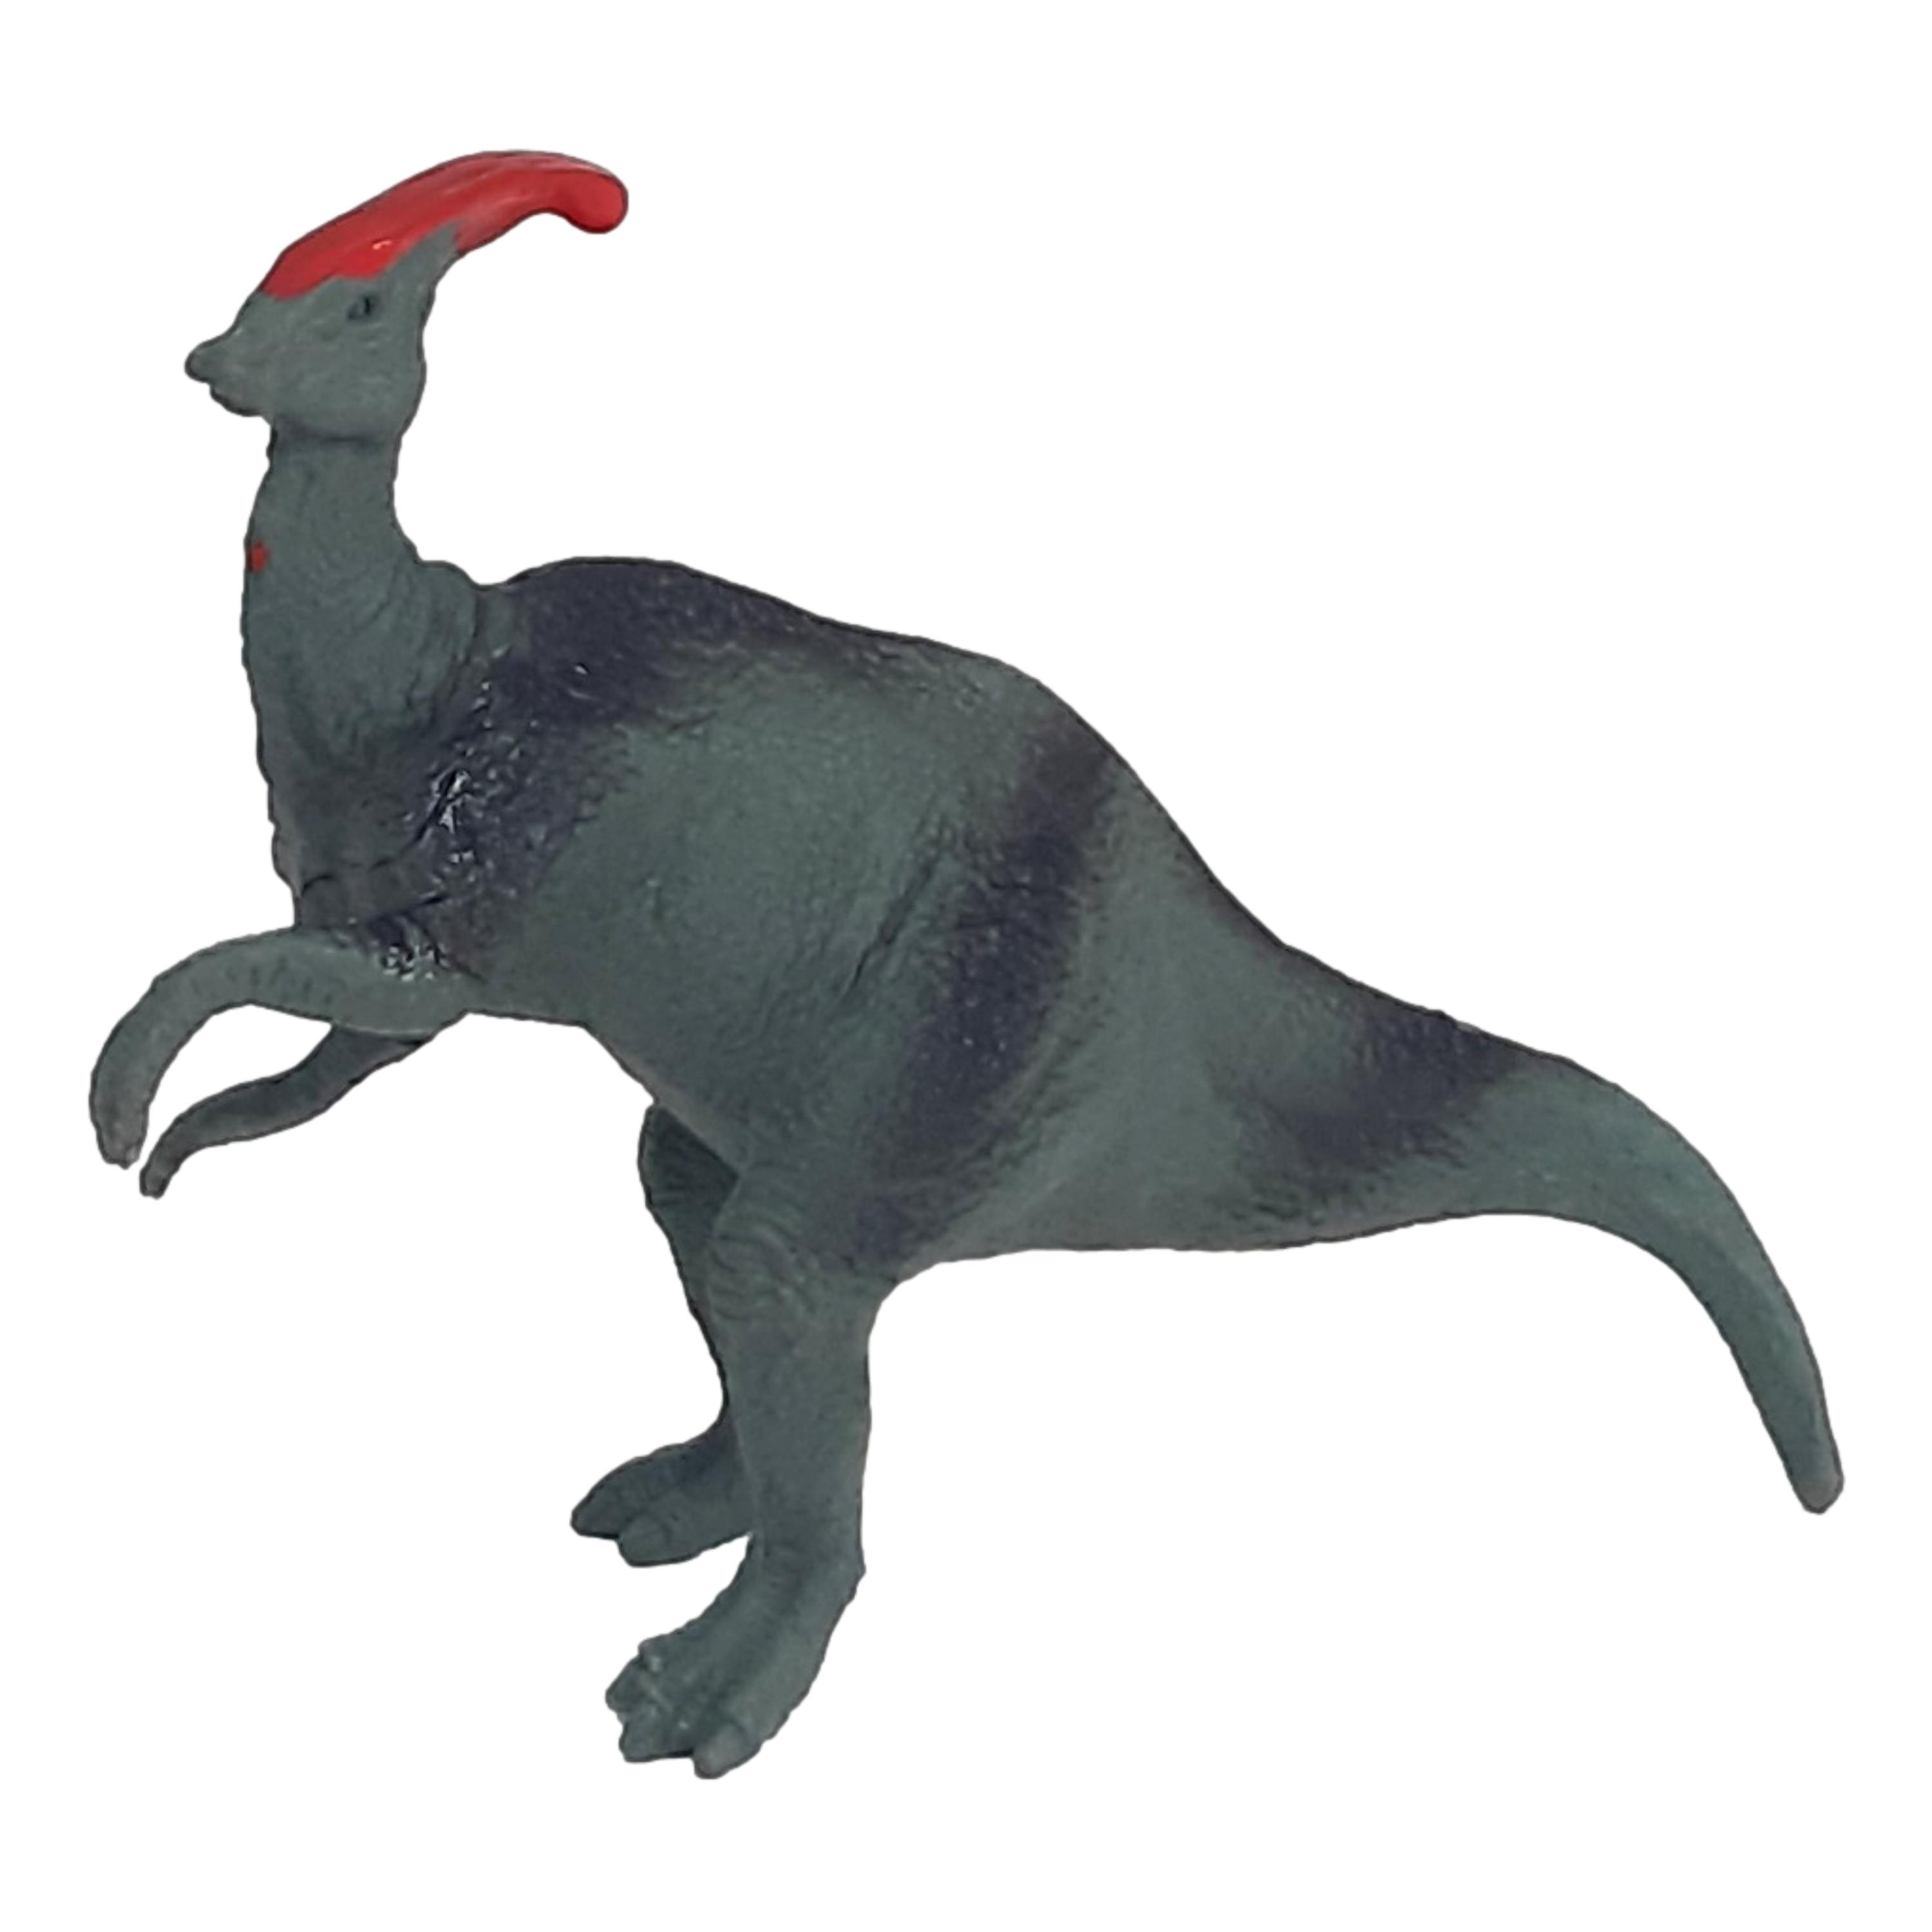 Figurina Dinozaur de Colectie, Dimensiune 10 cm, Model Realist, Gri